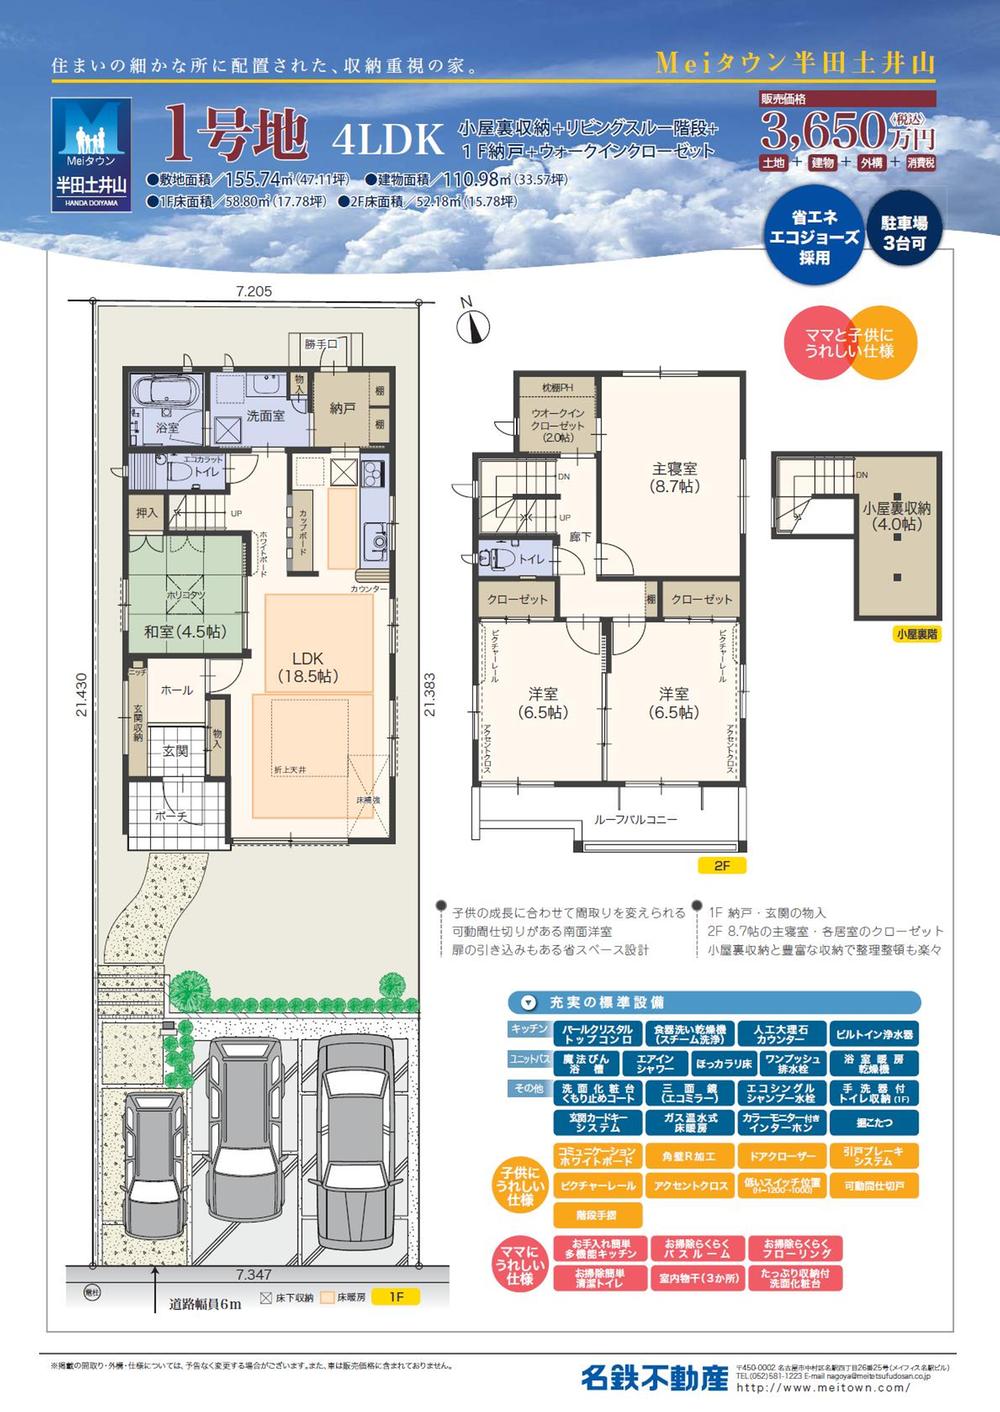 Floor plan. (No. 1 point), Price 36.5 million yen, 4LDK, Land area 155.74 sq m , Building area 110.98 sq m